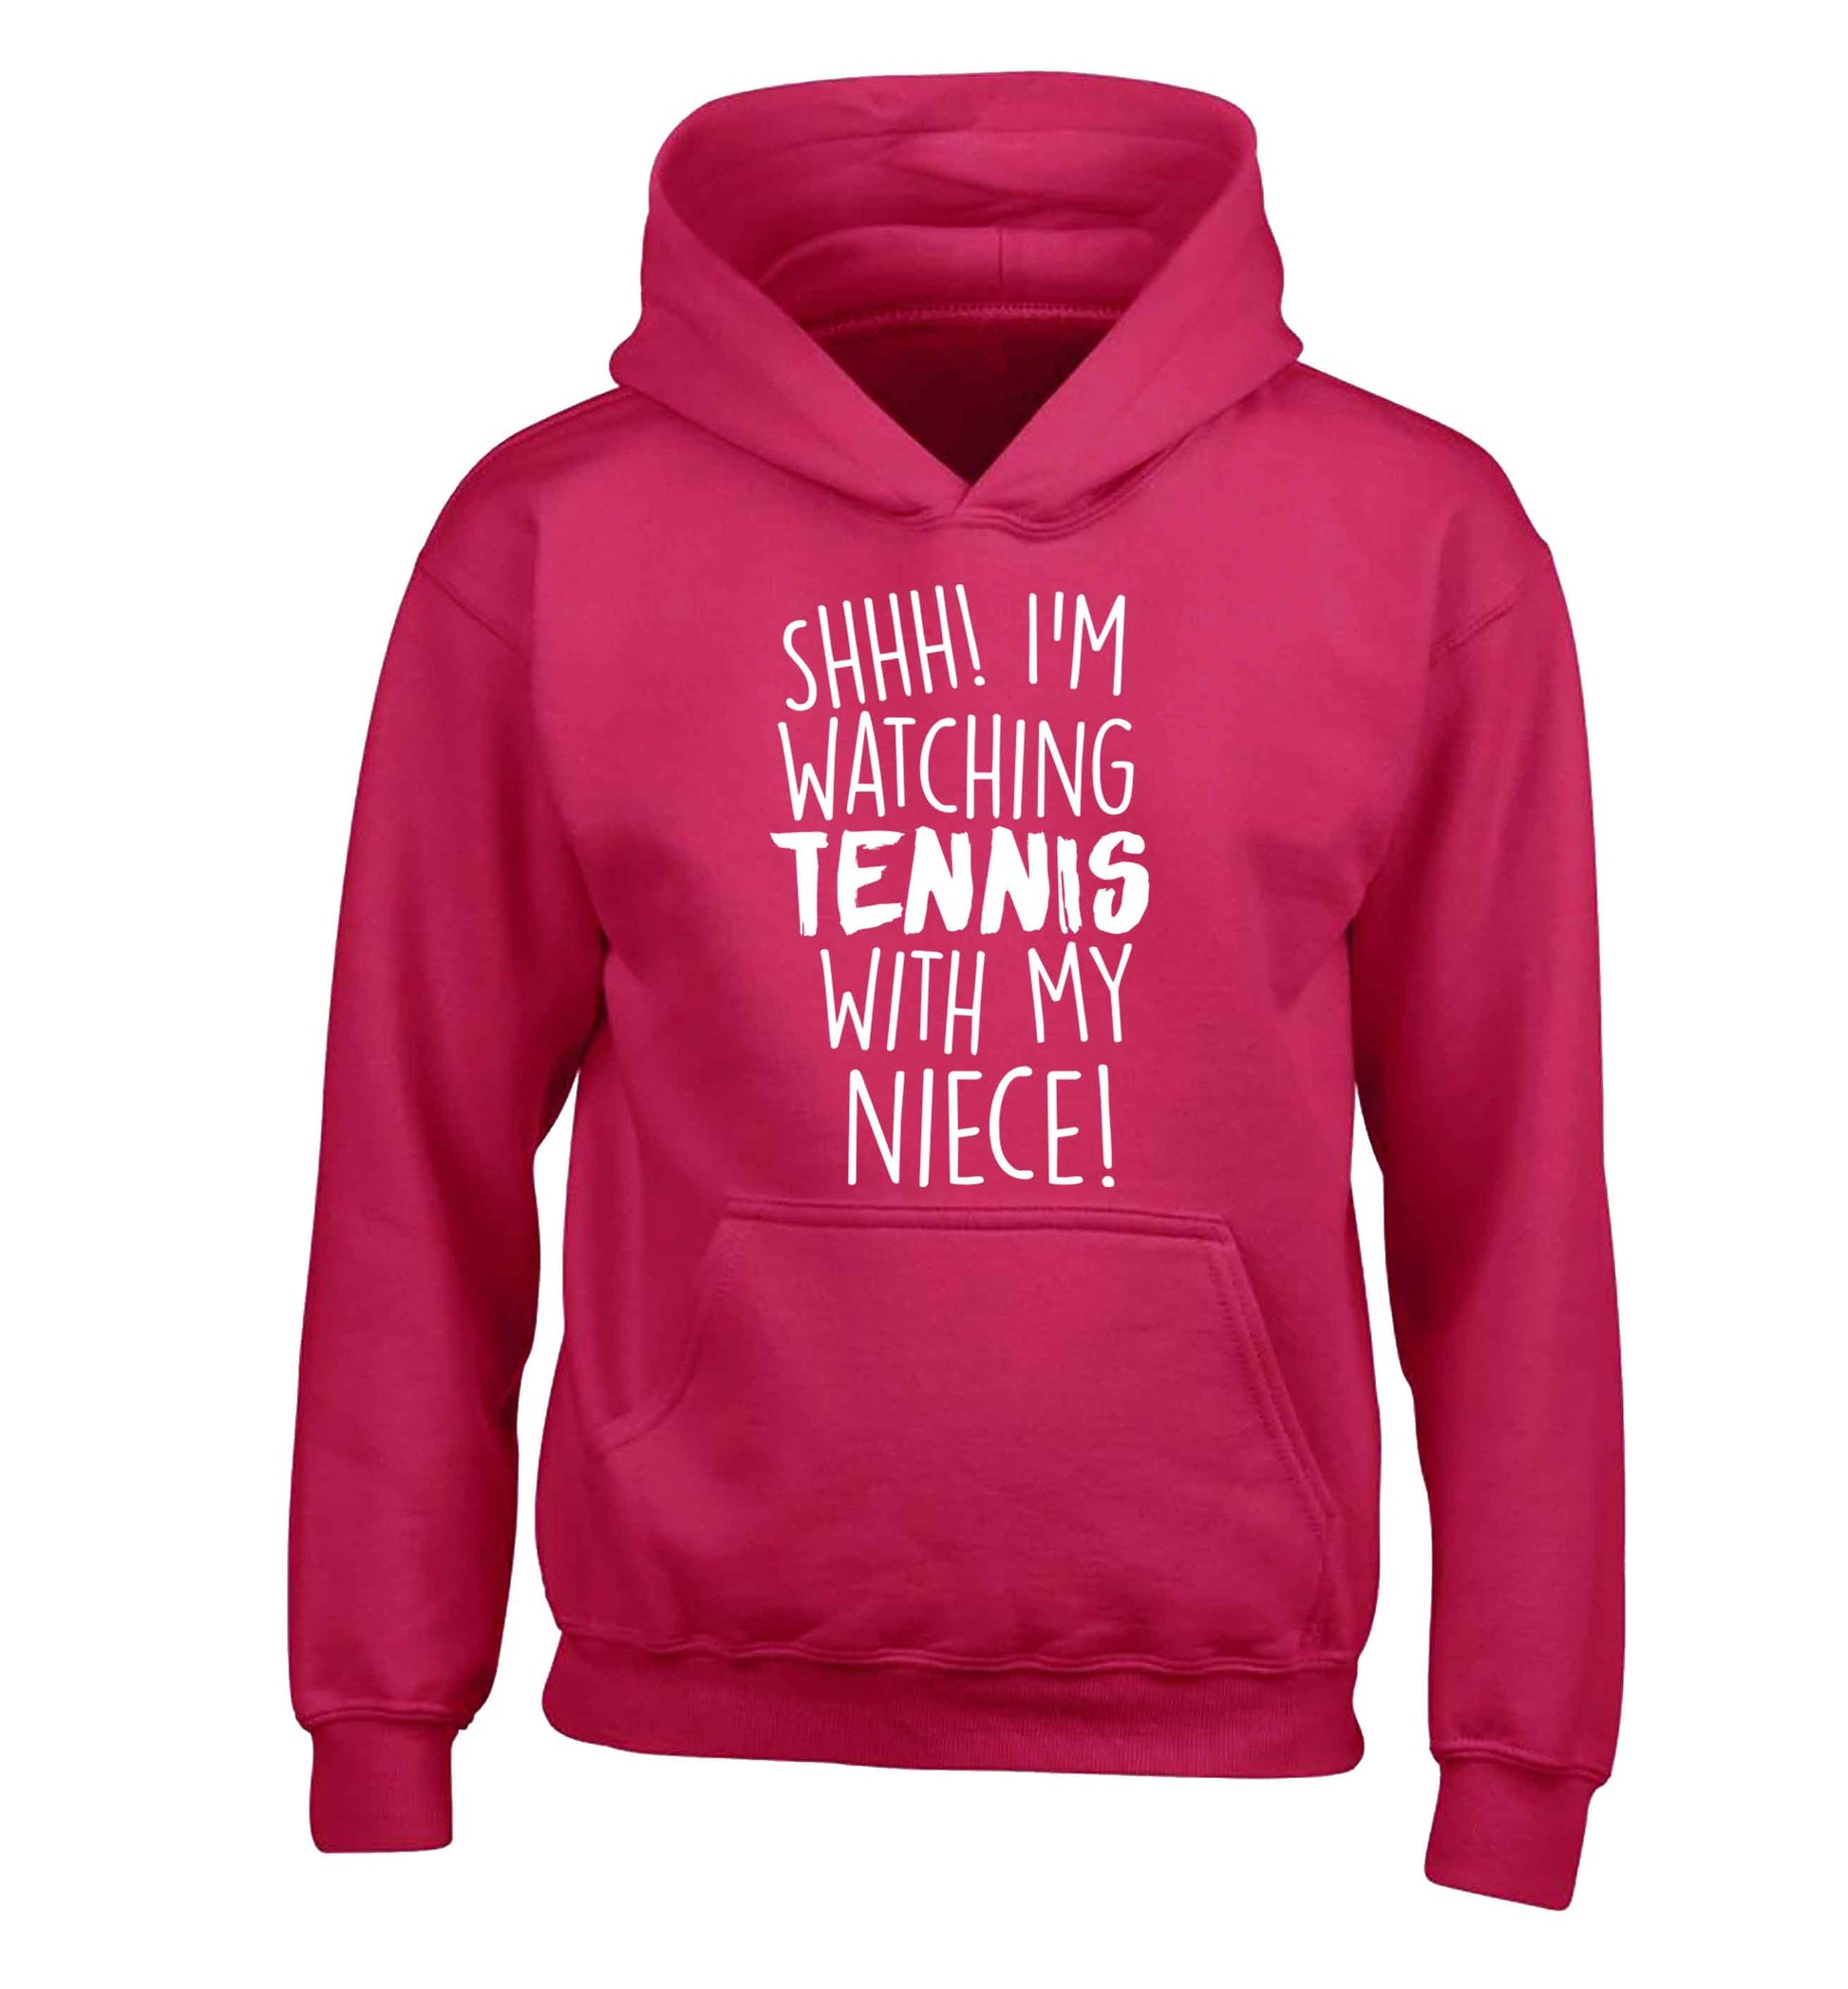 Shh! I'm watching tennis with my niece! children's pink hoodie 12-13 Years